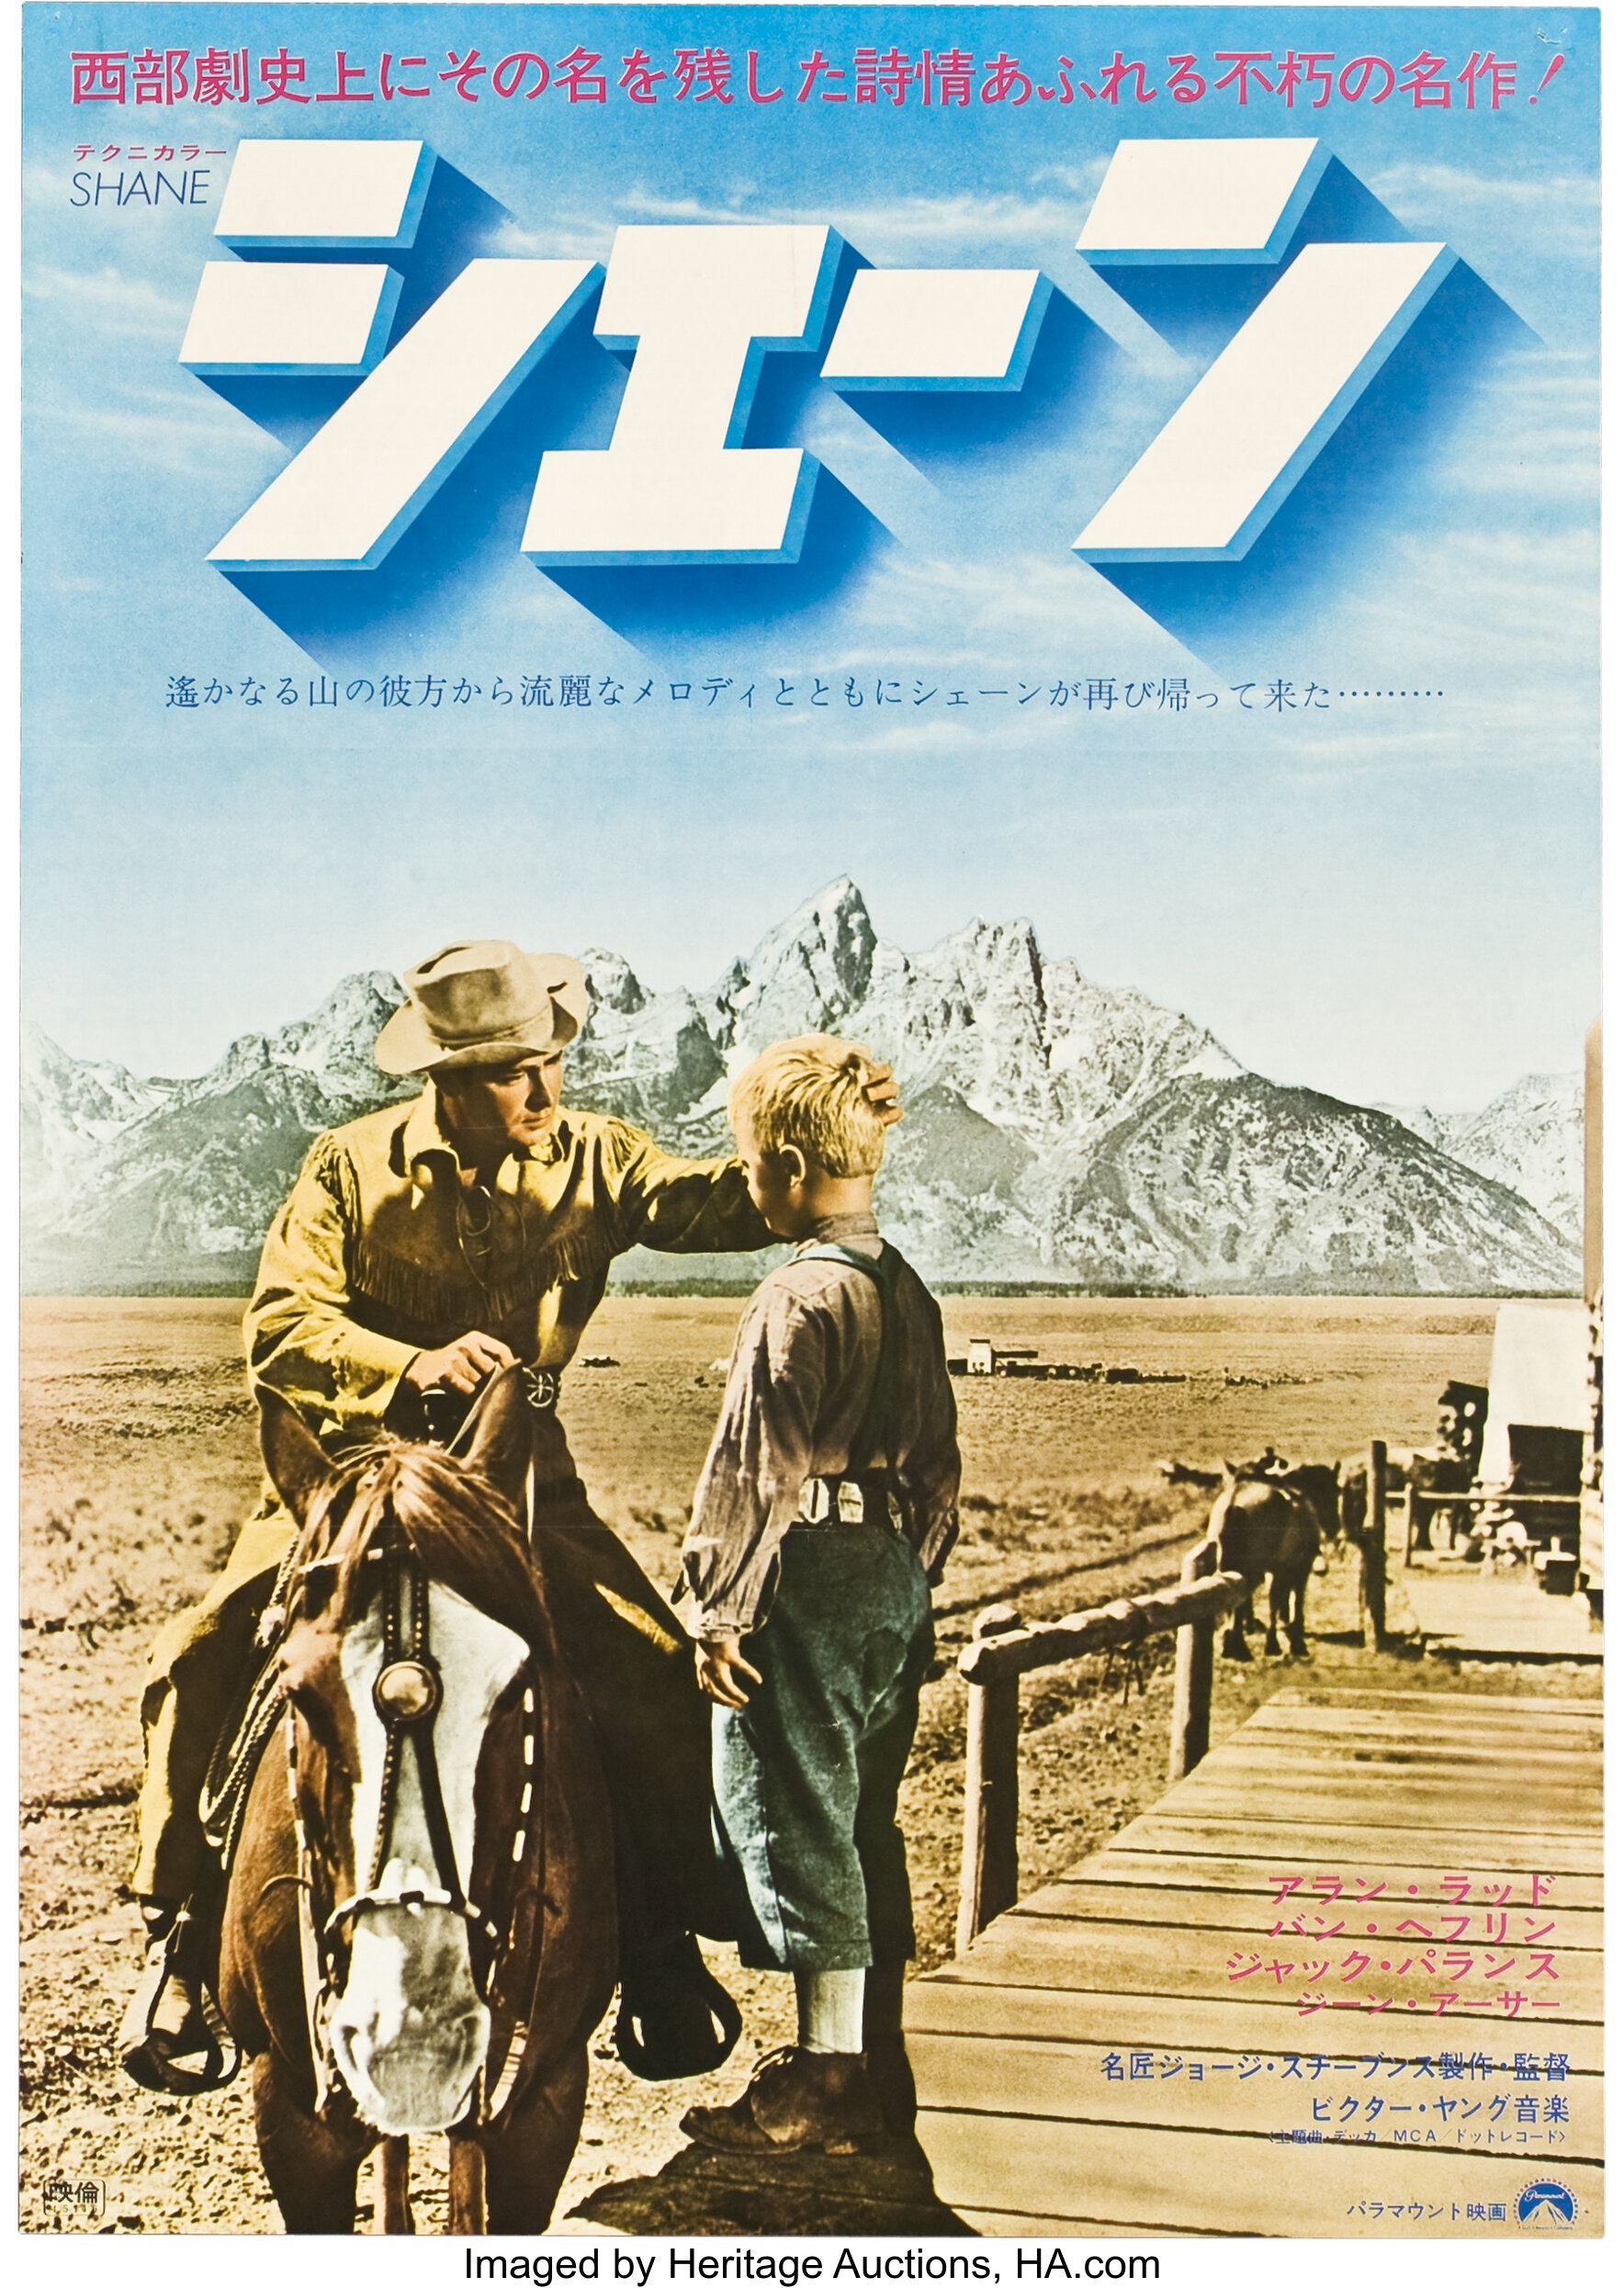 Shane Paramount R 1970 Japanese B2 X 29 Movie Lot Heritage Auctions